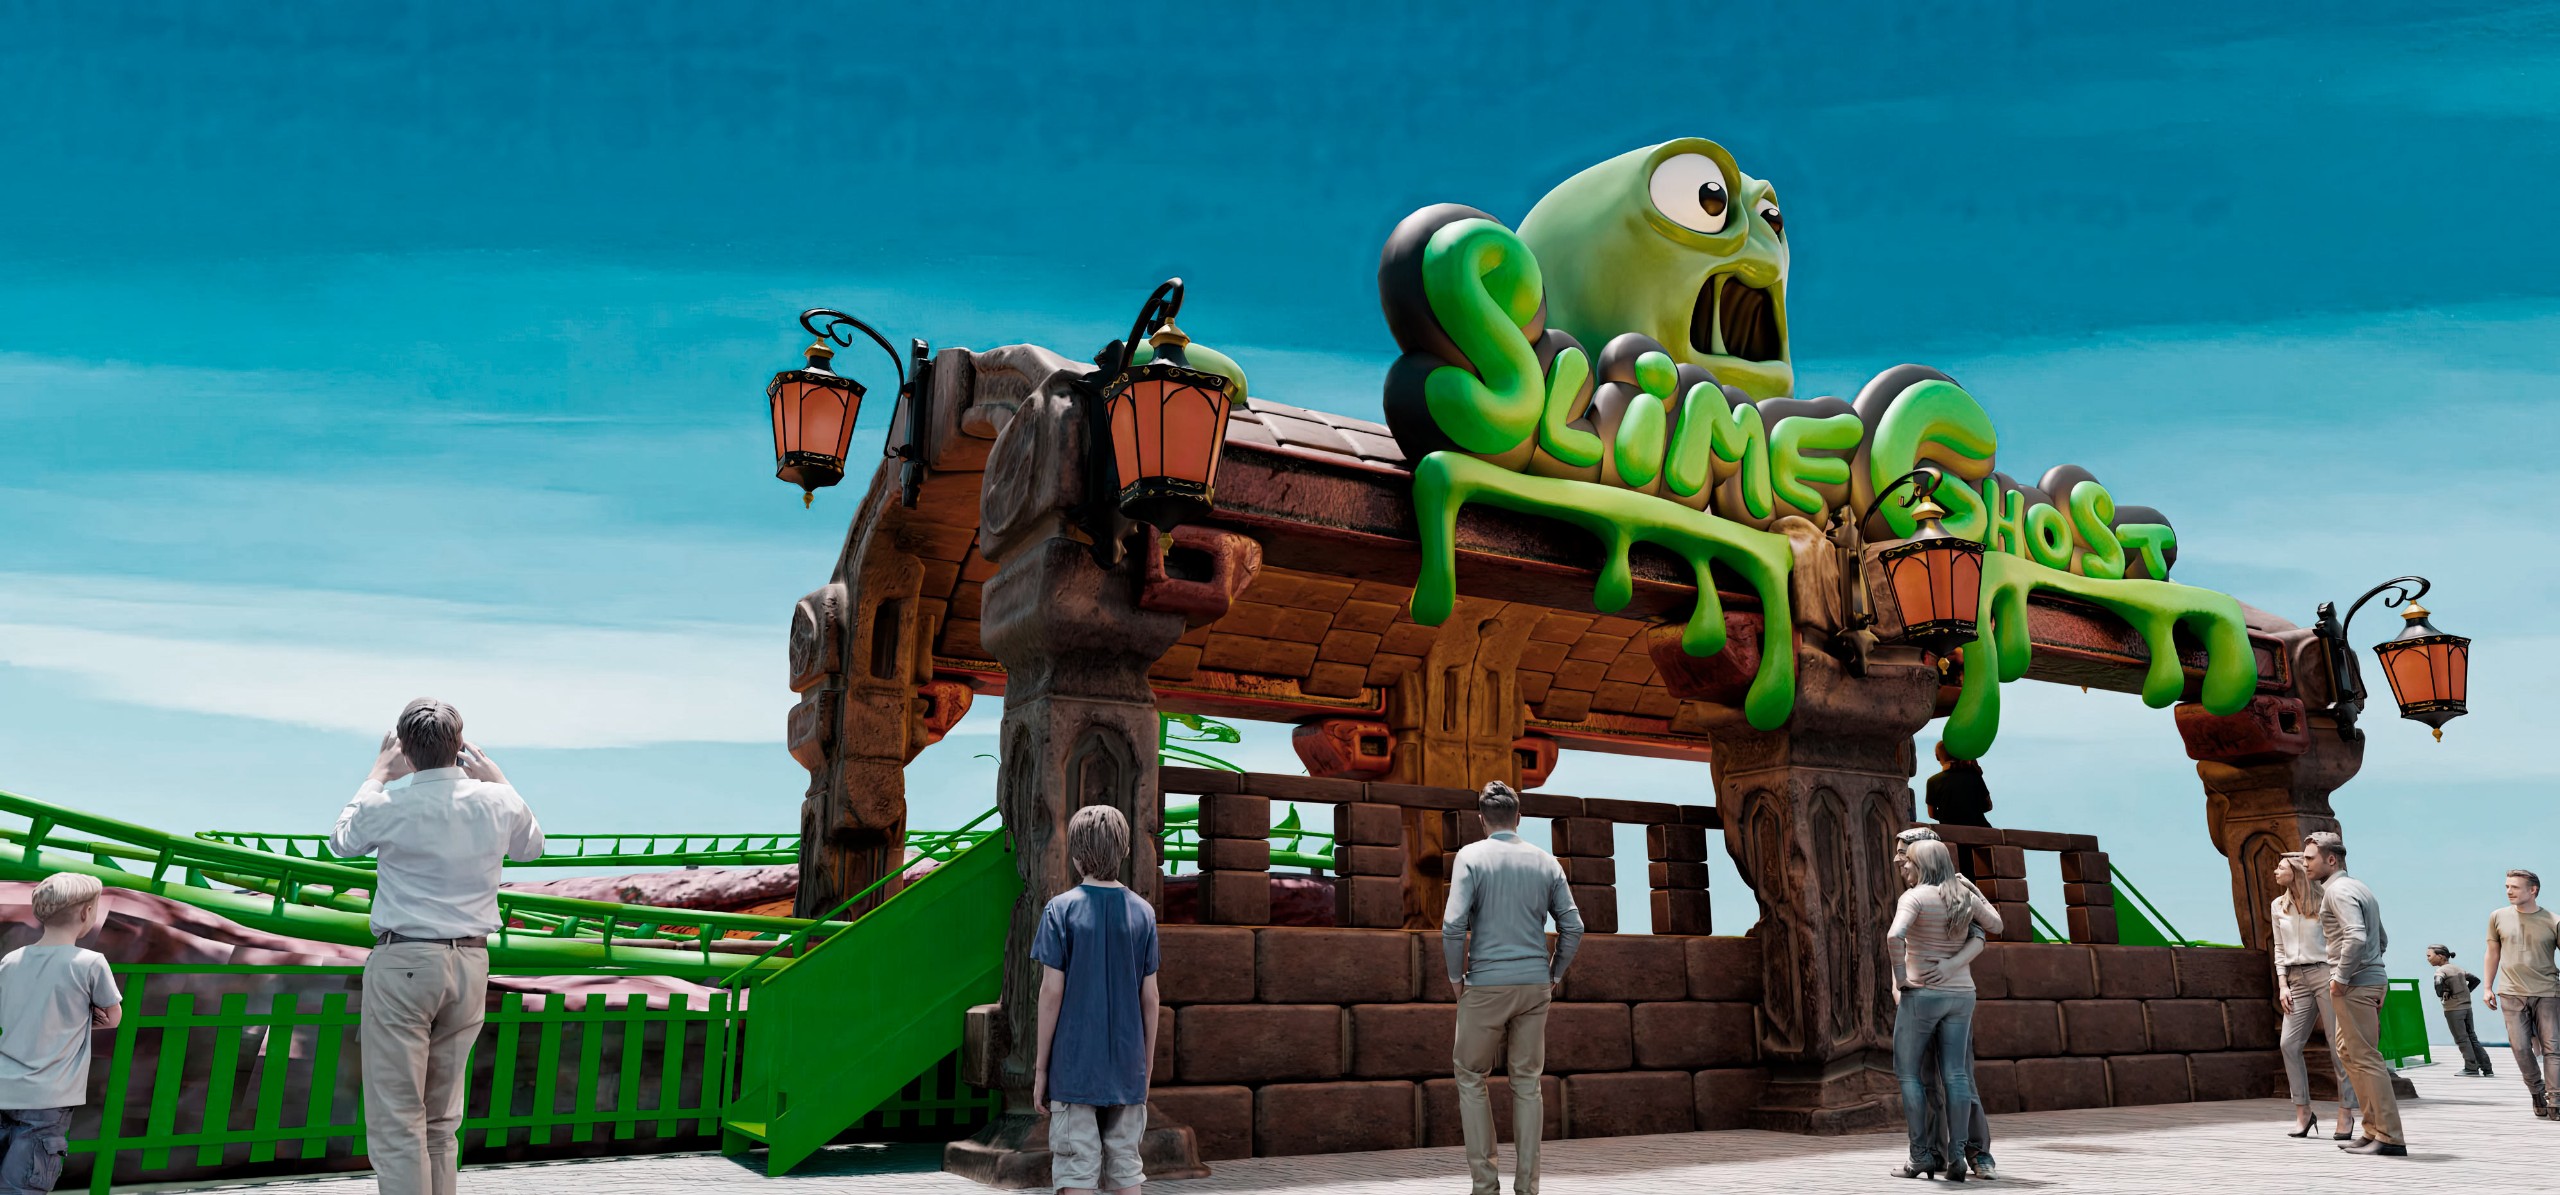 ROLLER COASTER ghost slime,theme park roller coaster